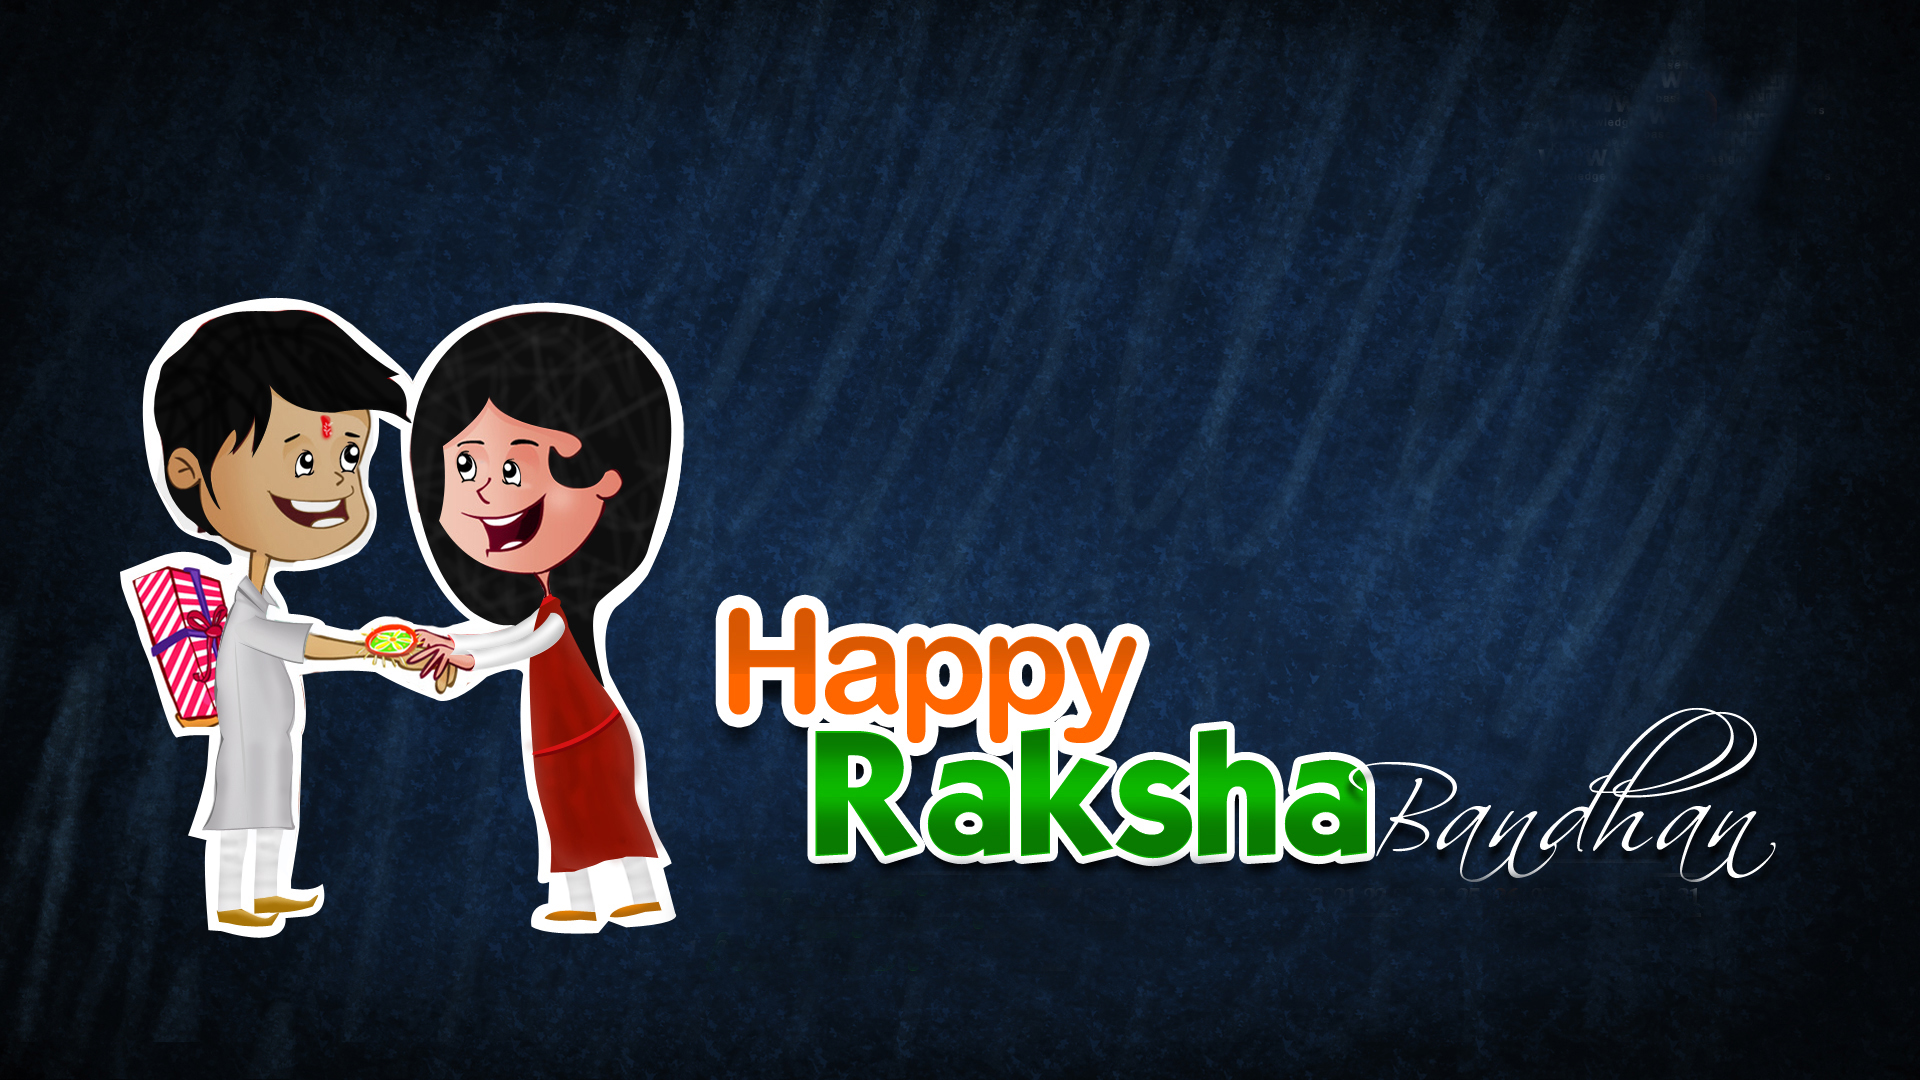 20 Best Raksha Bandhan 2015 Images HD 3d Wallpapers with Brothers & Sisters  Free Download for Facebook Cover Pics, Desktop